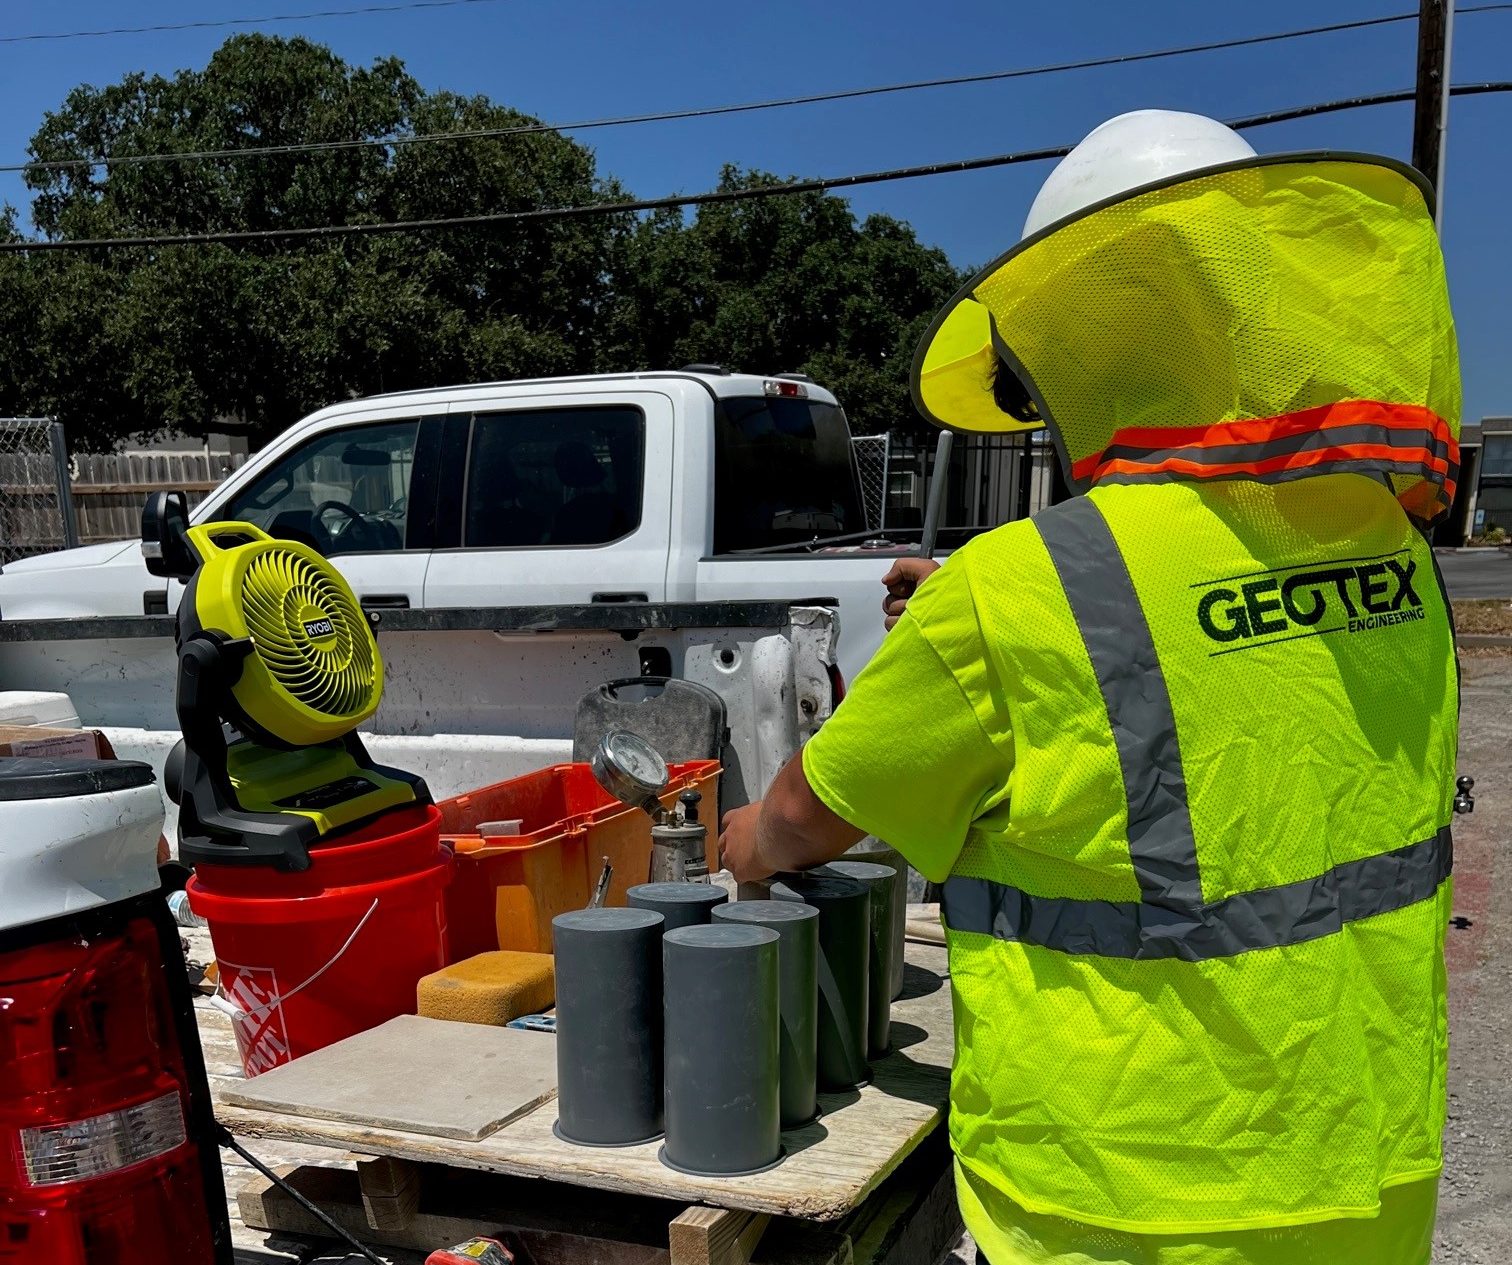 New PPE Helps Keep Geotex Crews Cool in Texas Heat